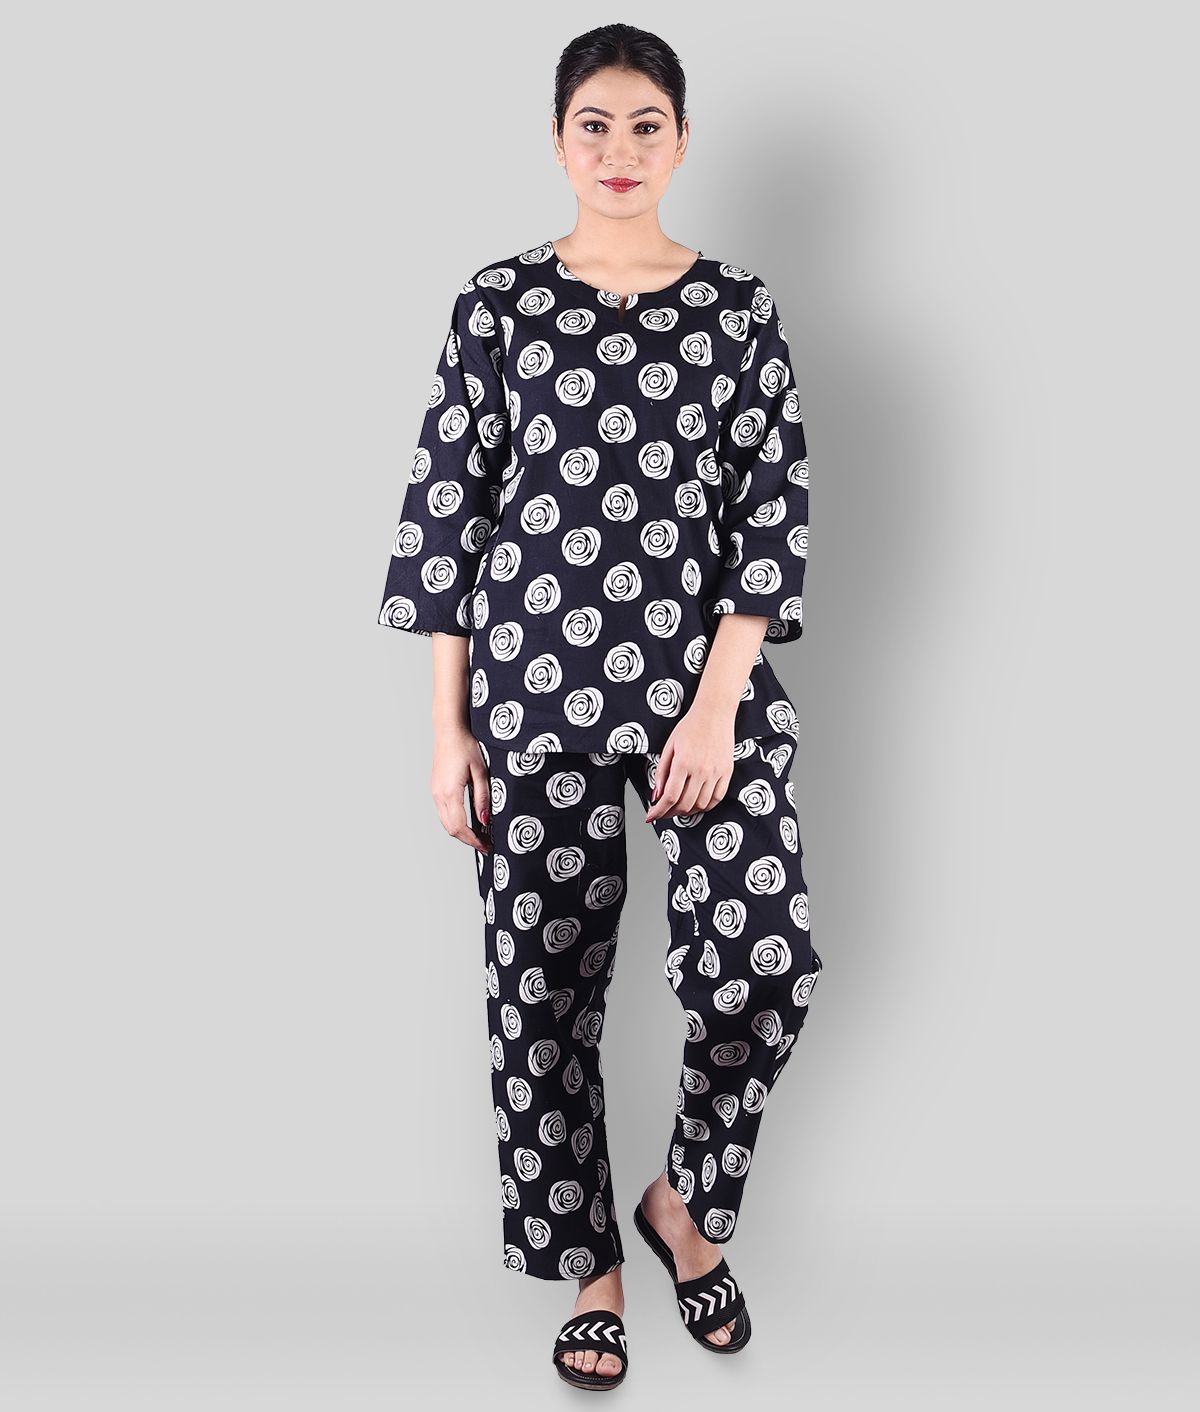 BACHUU - Black Cotton Women's Nightwear Nightsuit Sets ( Pack of 1 )